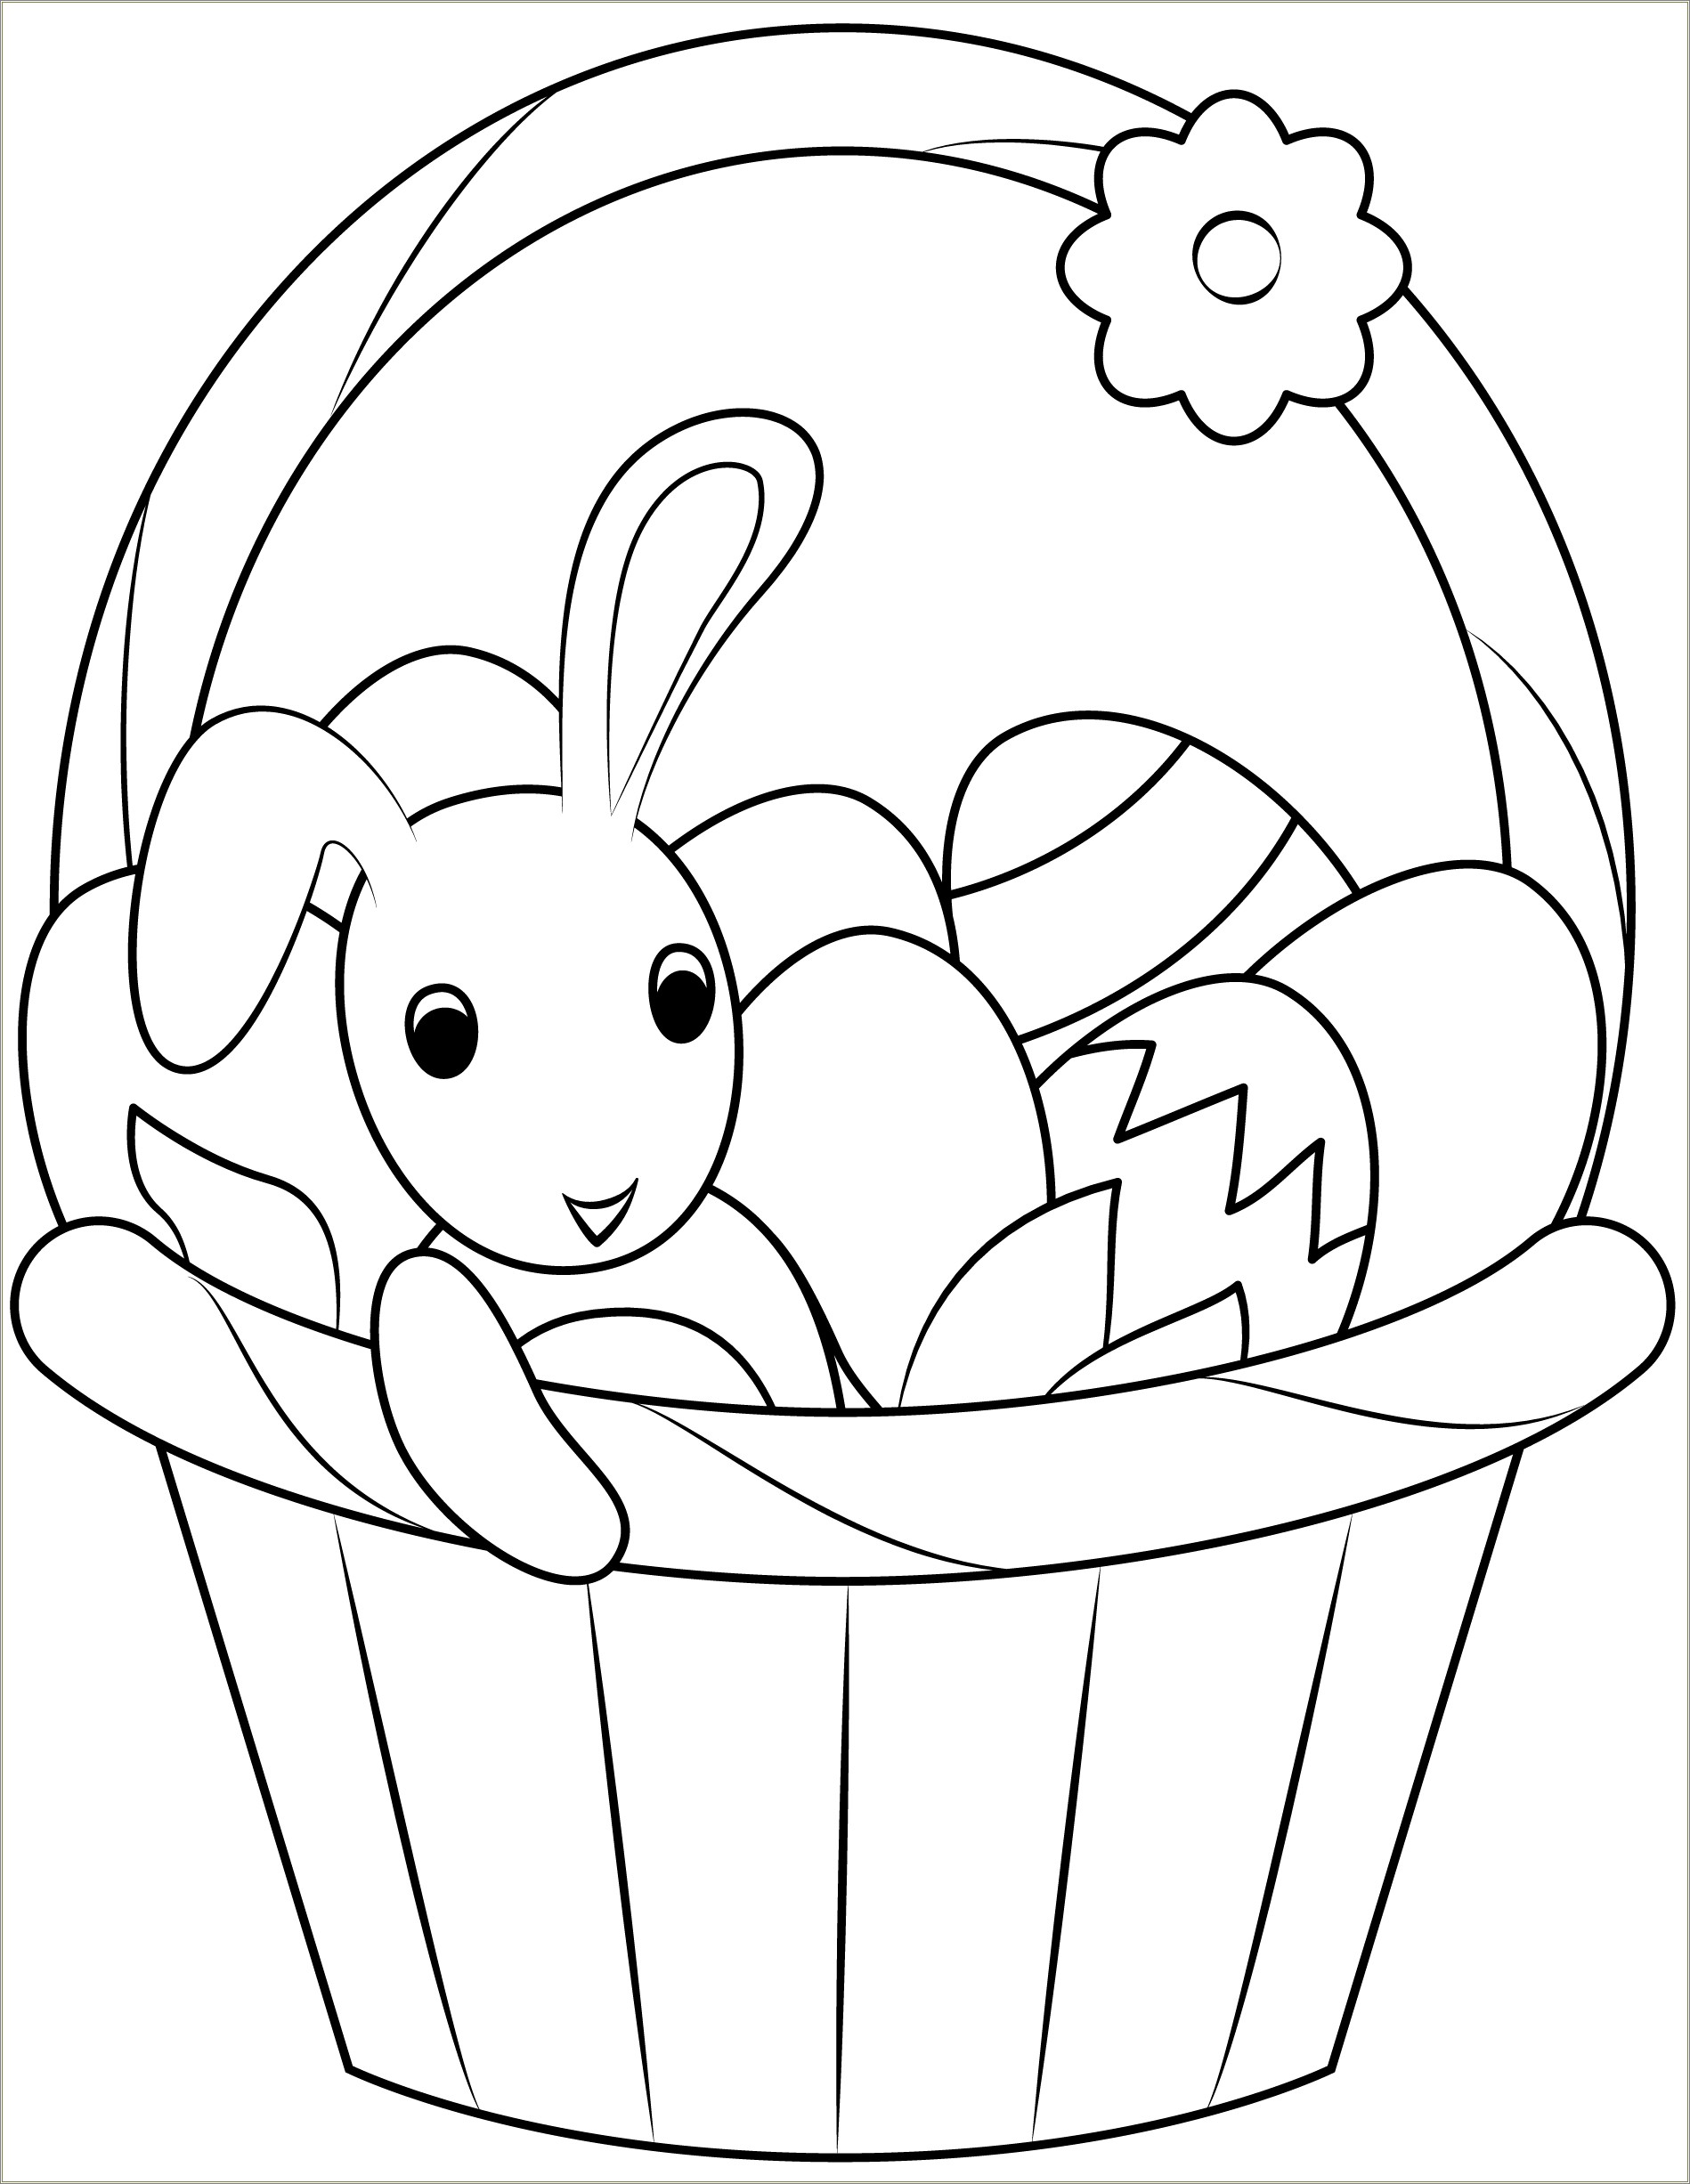 Free Rabbit Easter Basket Templates To Print